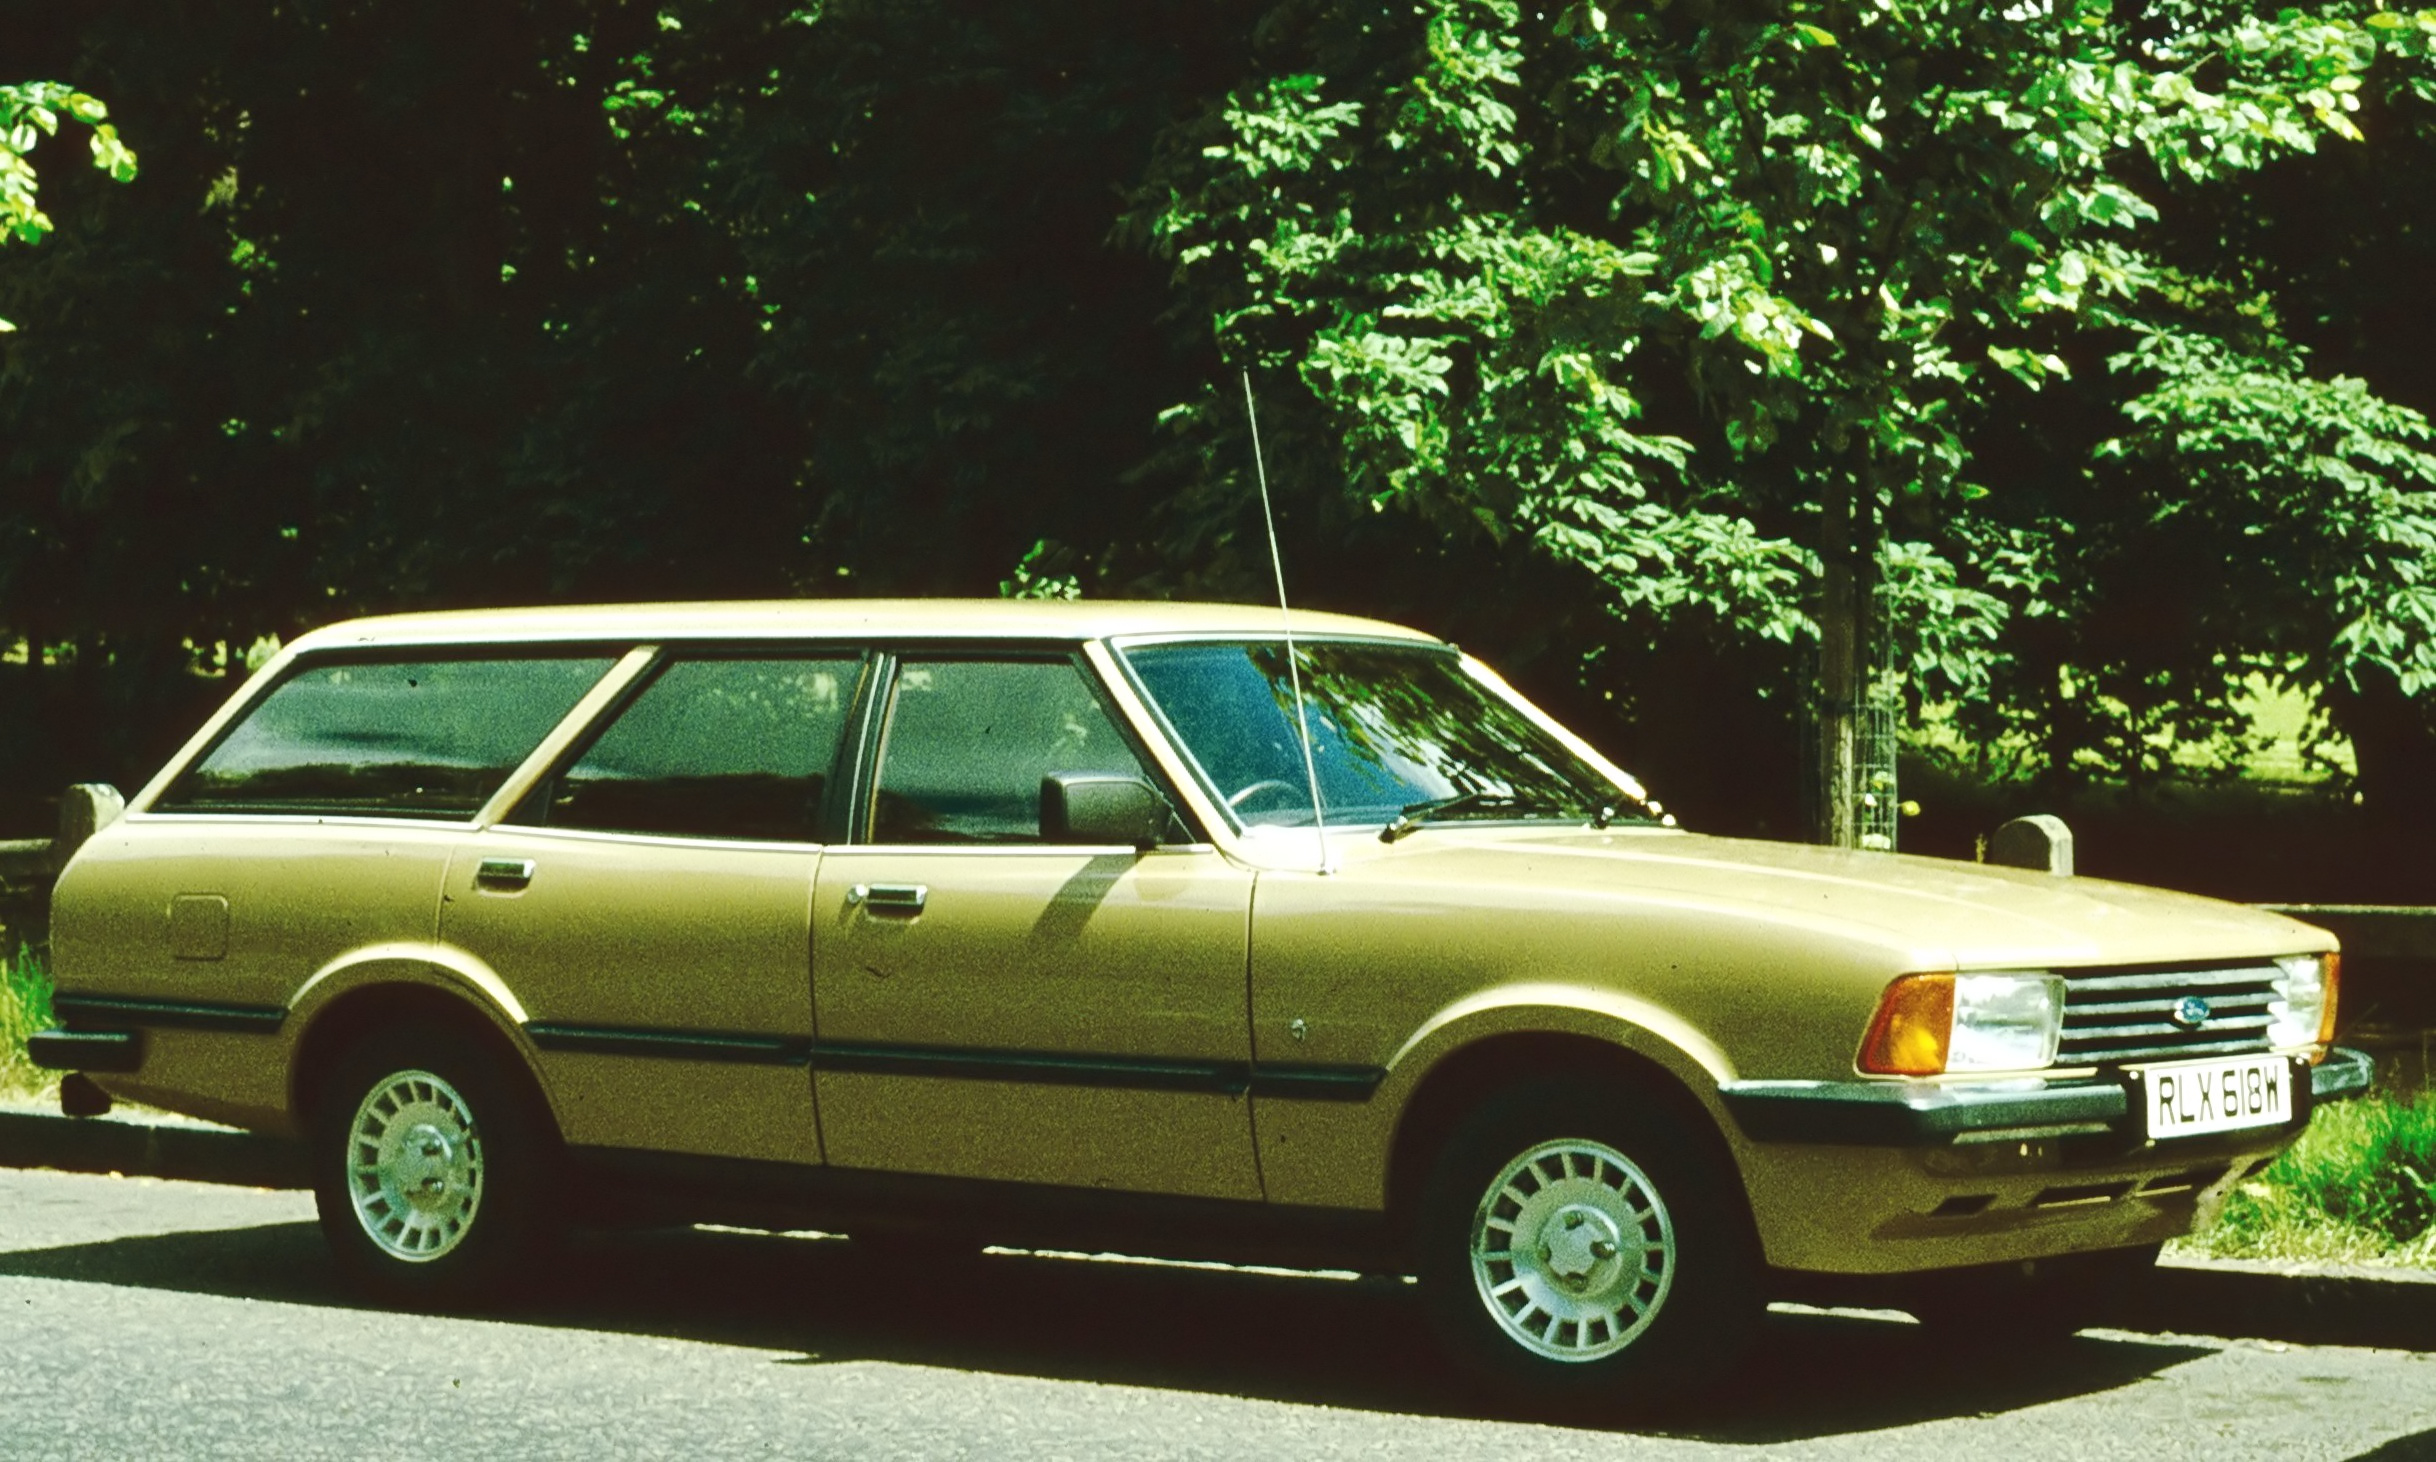 Ford Cortina De Luxe wagon